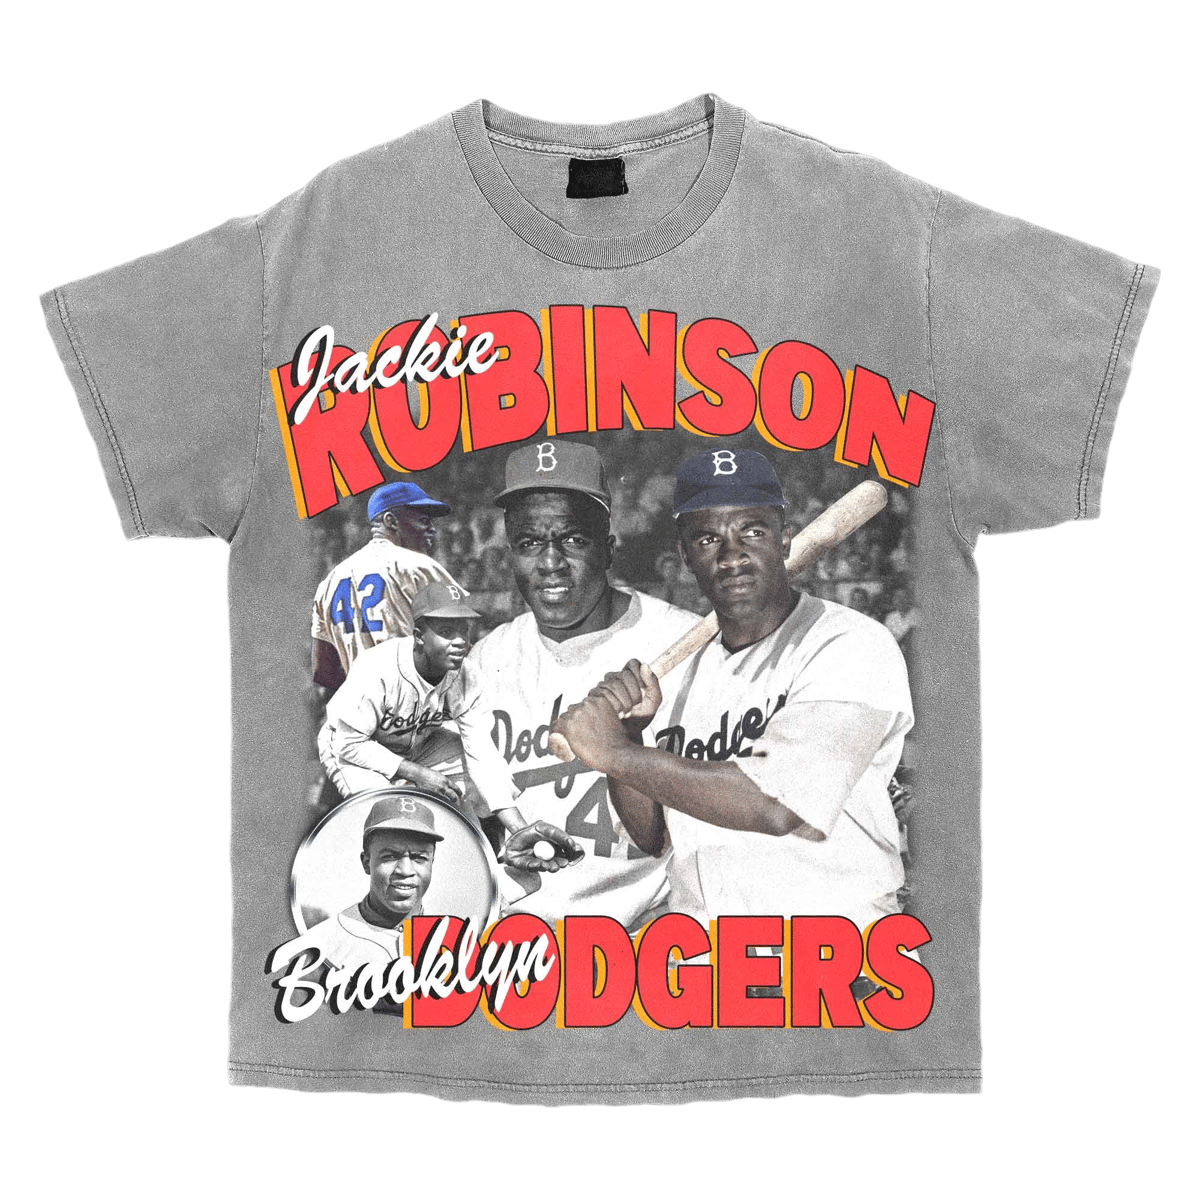 Official Jackie Robinson Jersey, Jackie Robinson Shirts, Baseball Apparel, Jackie  Robinson Gear